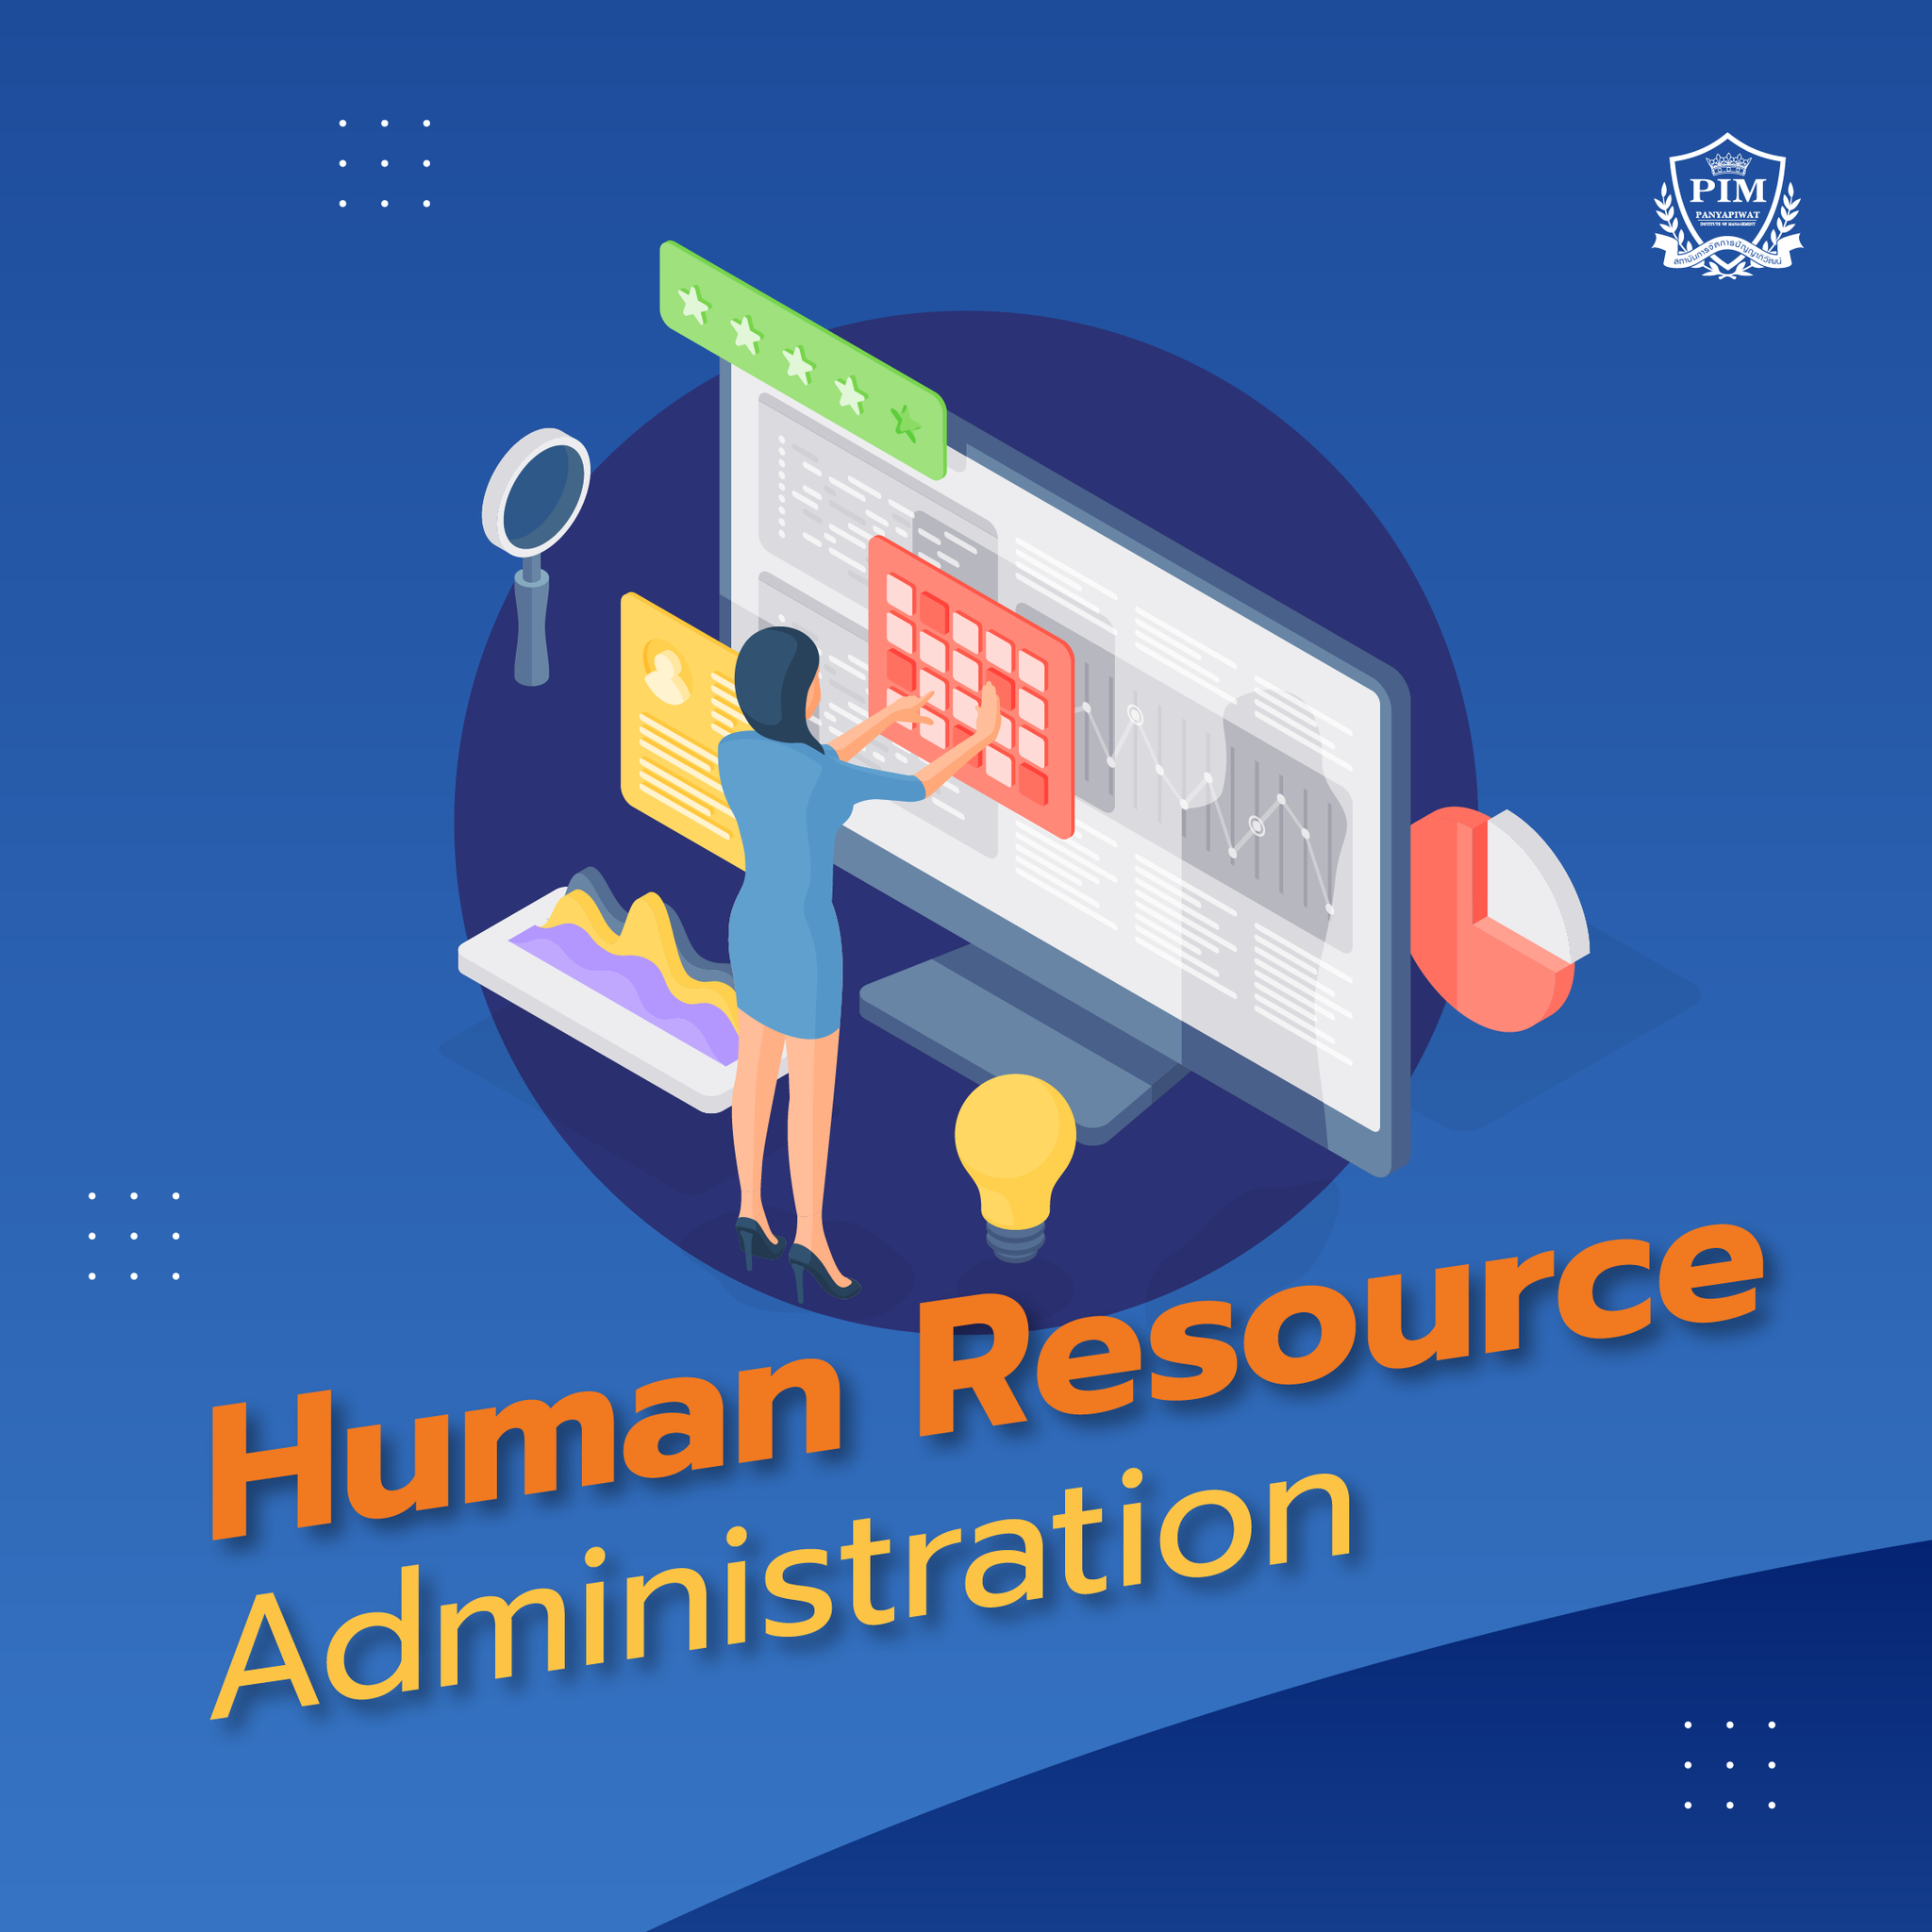 Human Resource Administration